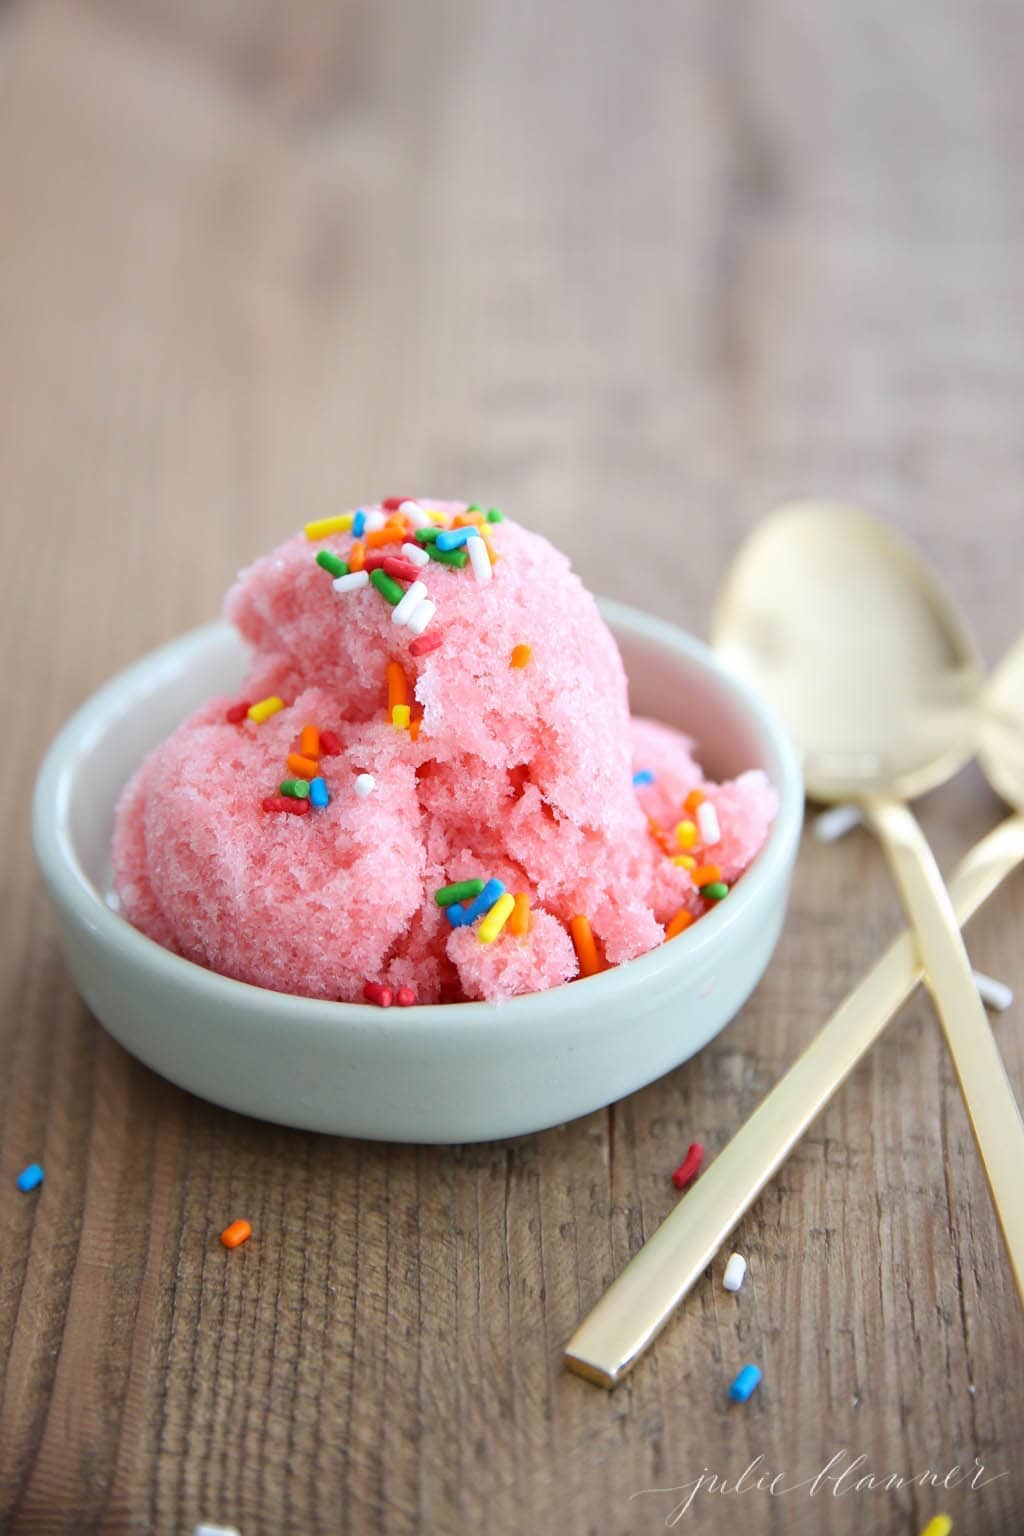 http://julieblanner.com/wp-content/uploads/2015/03/how-to-make-snow-ice-cream.jpg